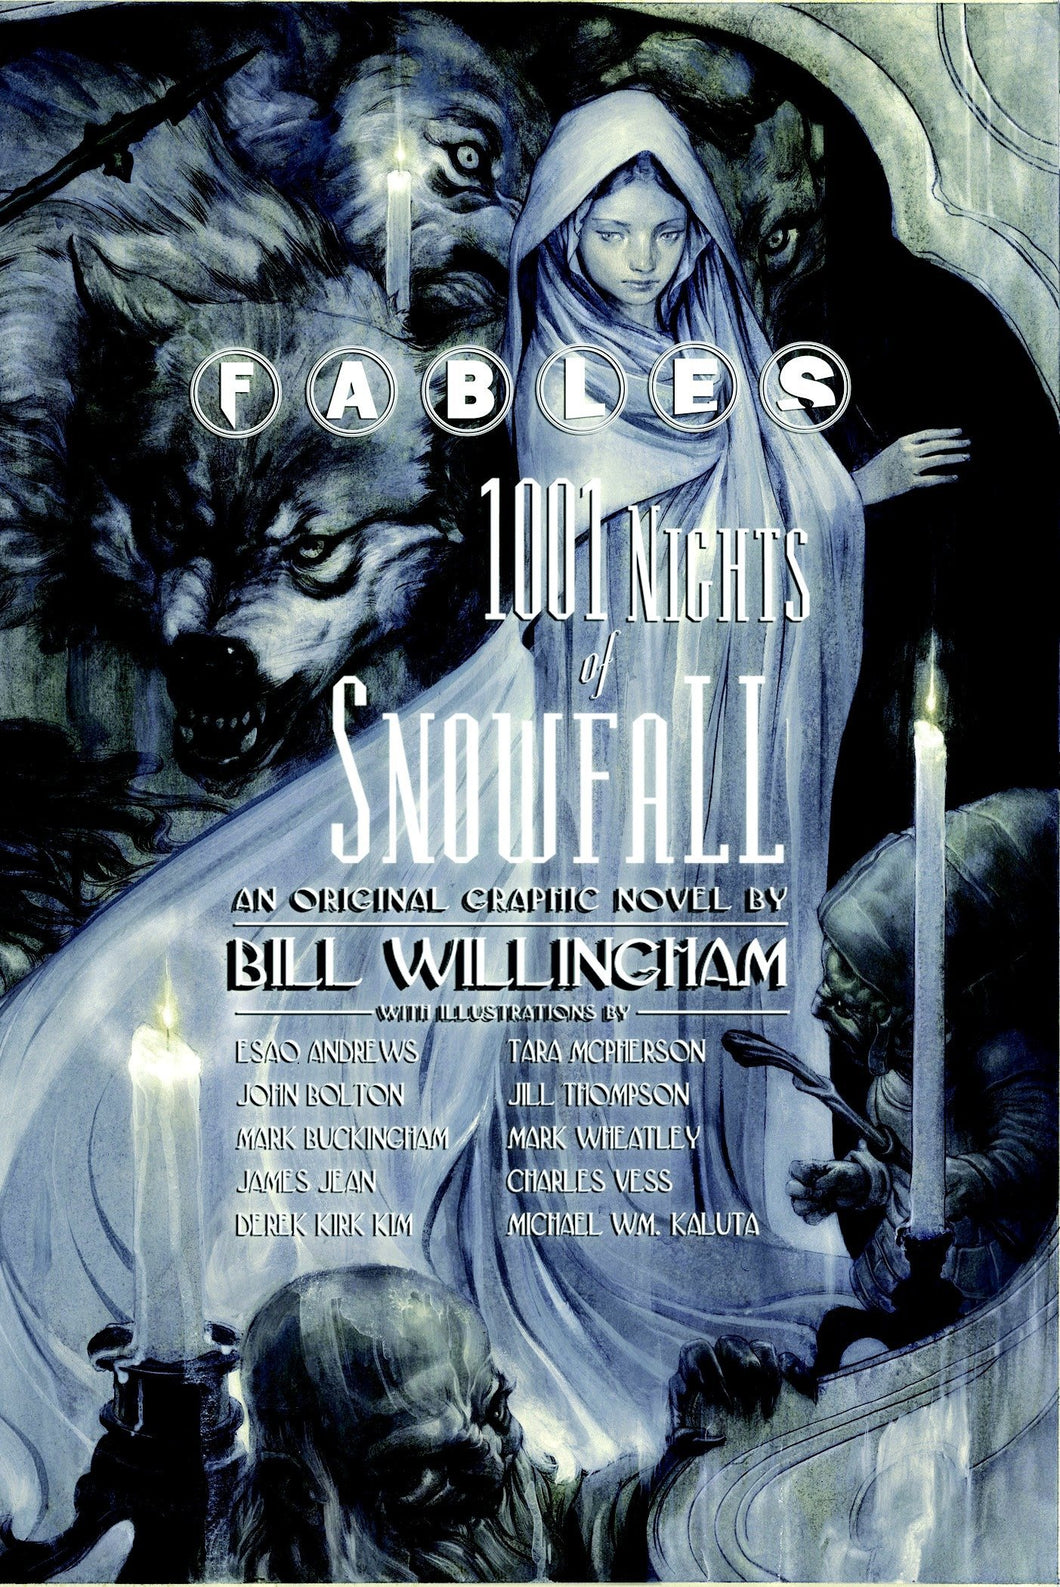 Fables: 1001 Nights of Snowfall (TPB) (2008)